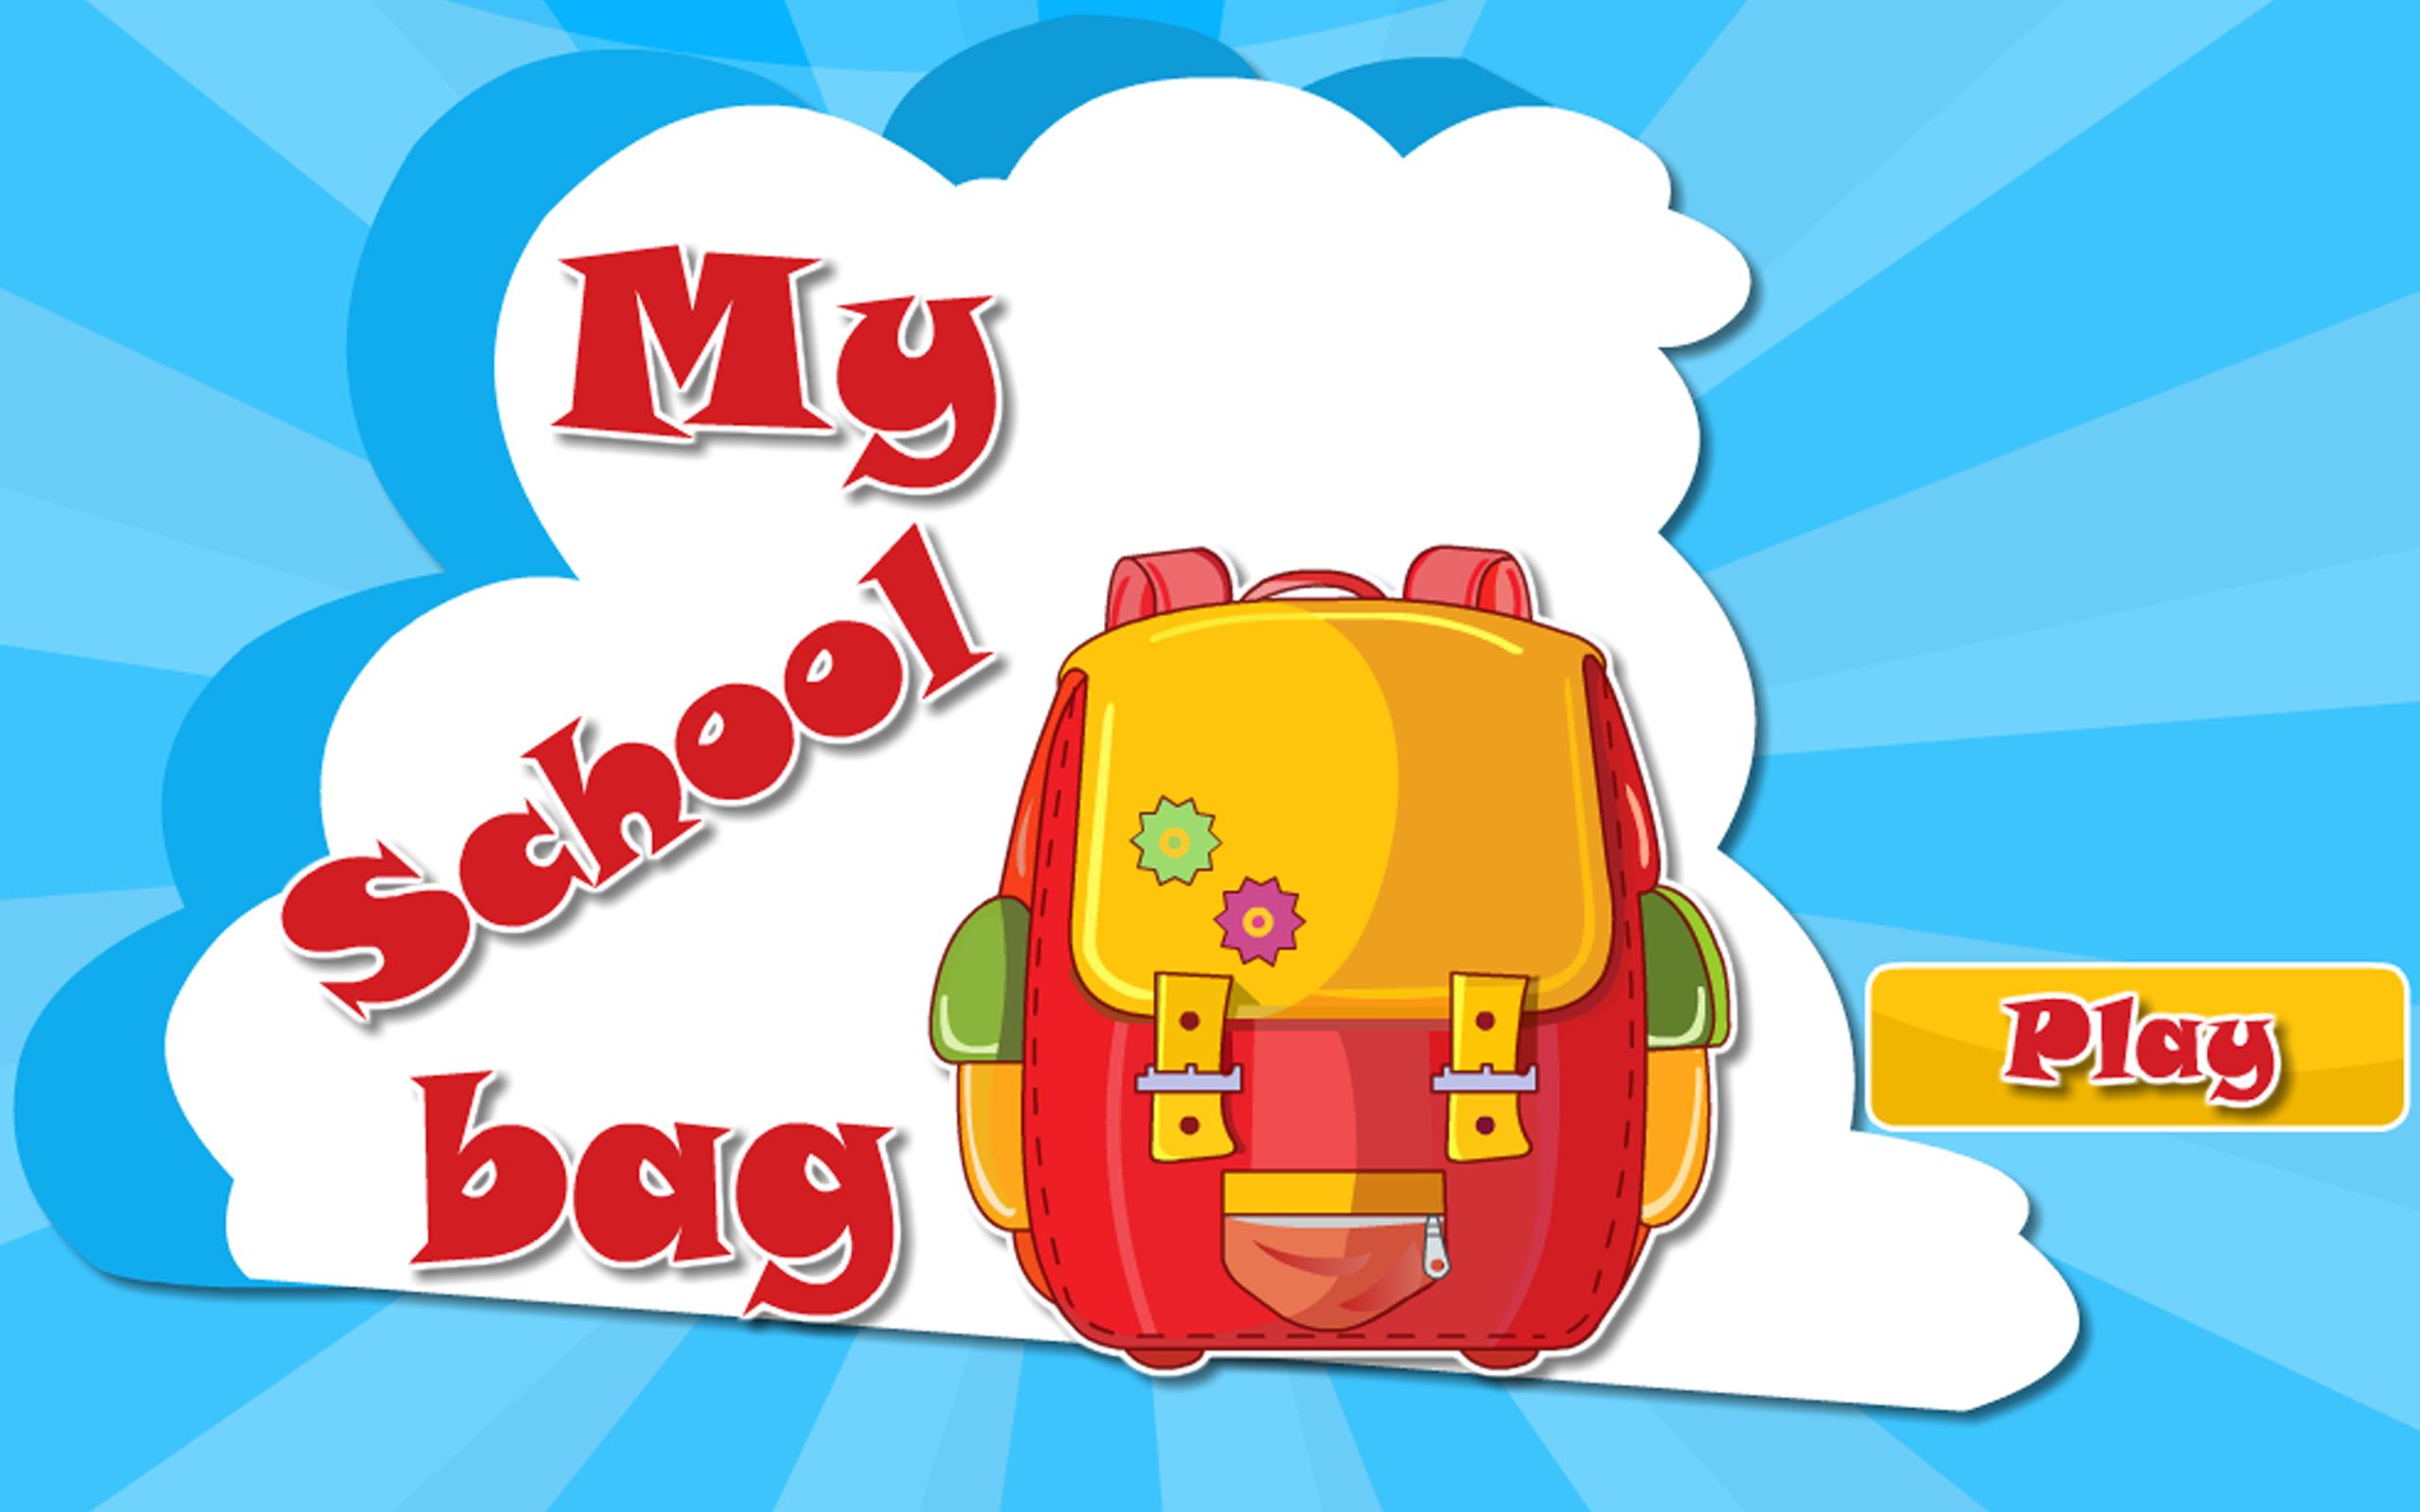 My school back. School Bag. Bag game. My School Bag. School Bag game.